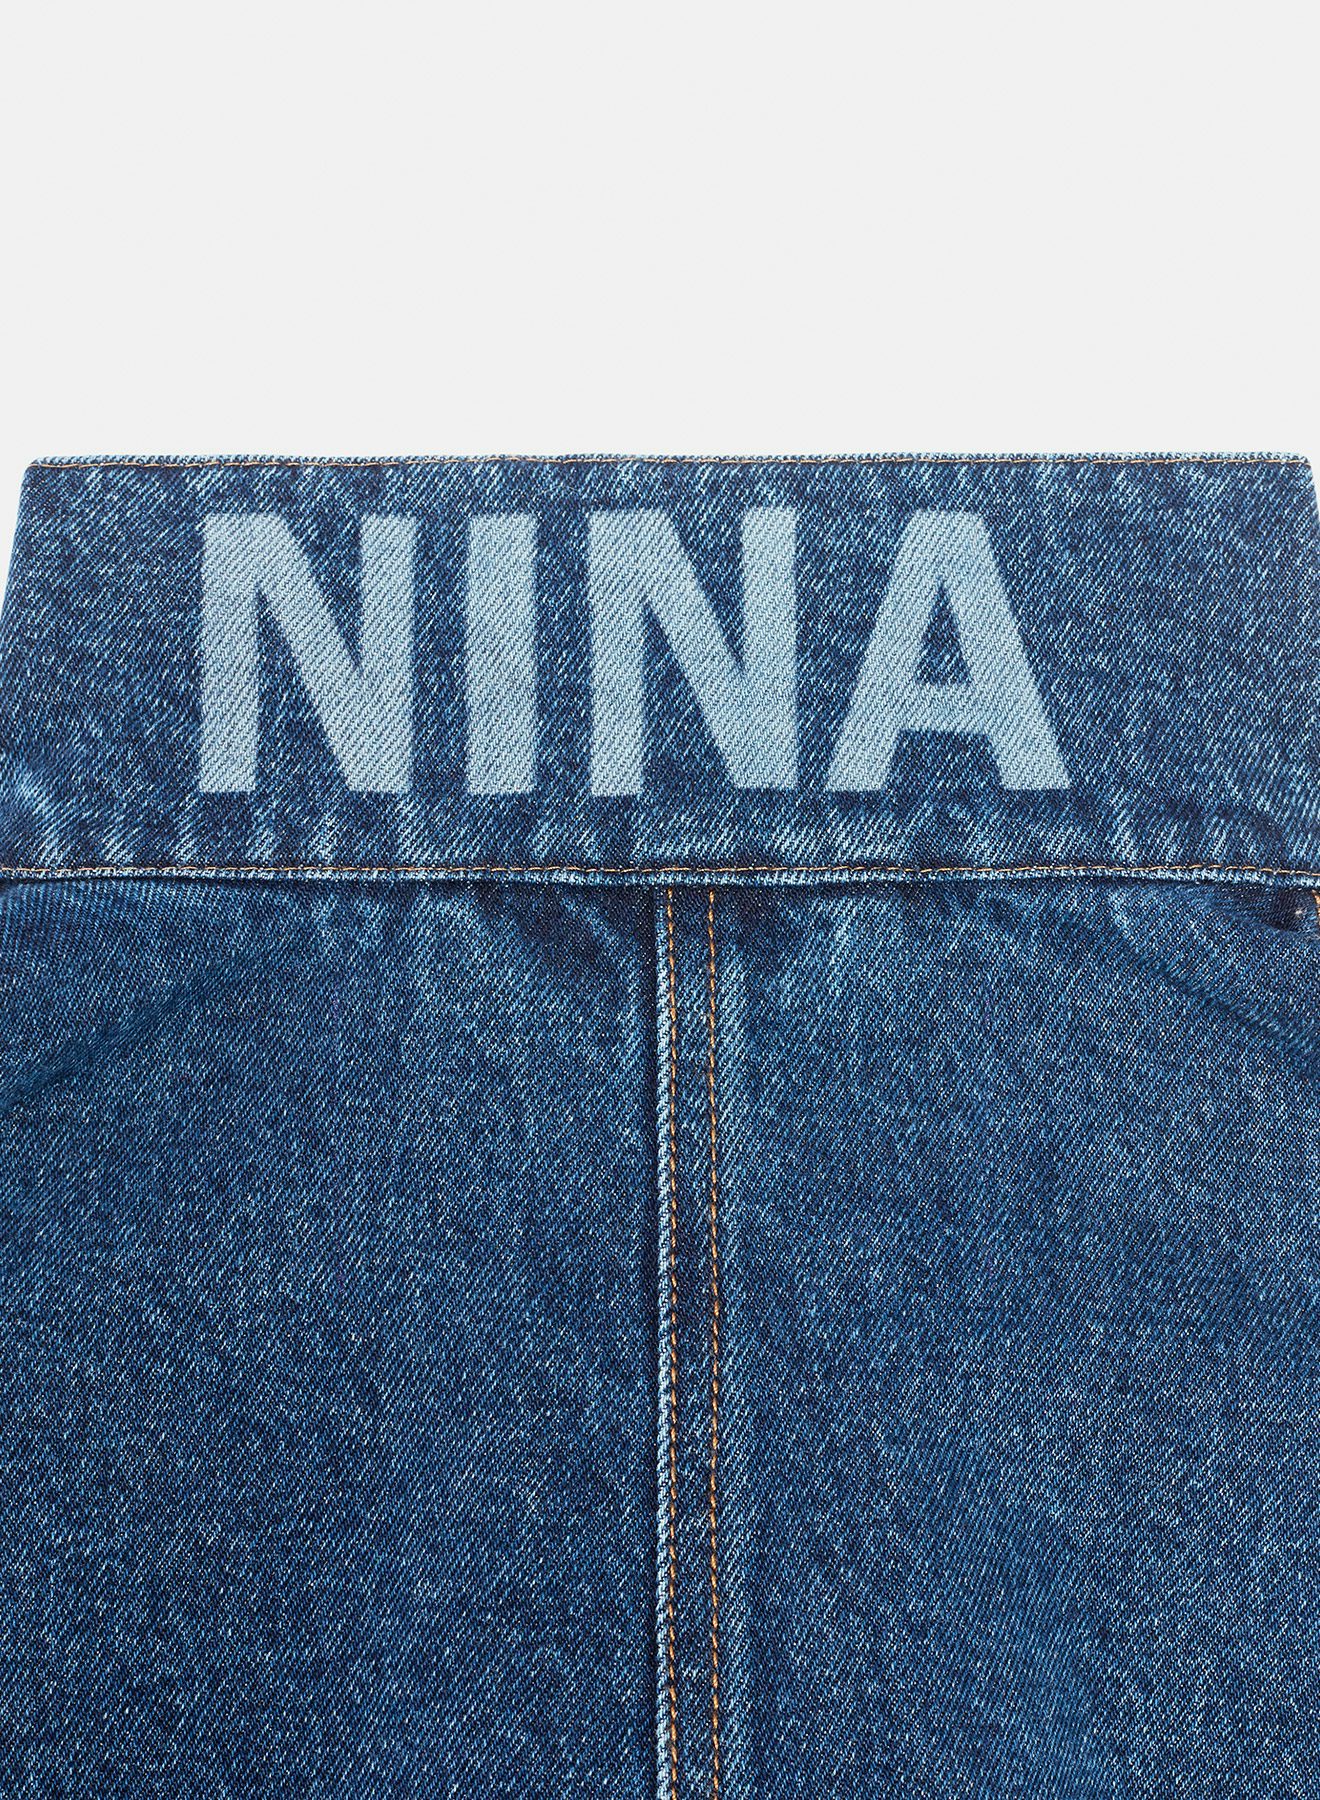 Cotton denim cocoon jacket dark blue - Nina Ricci